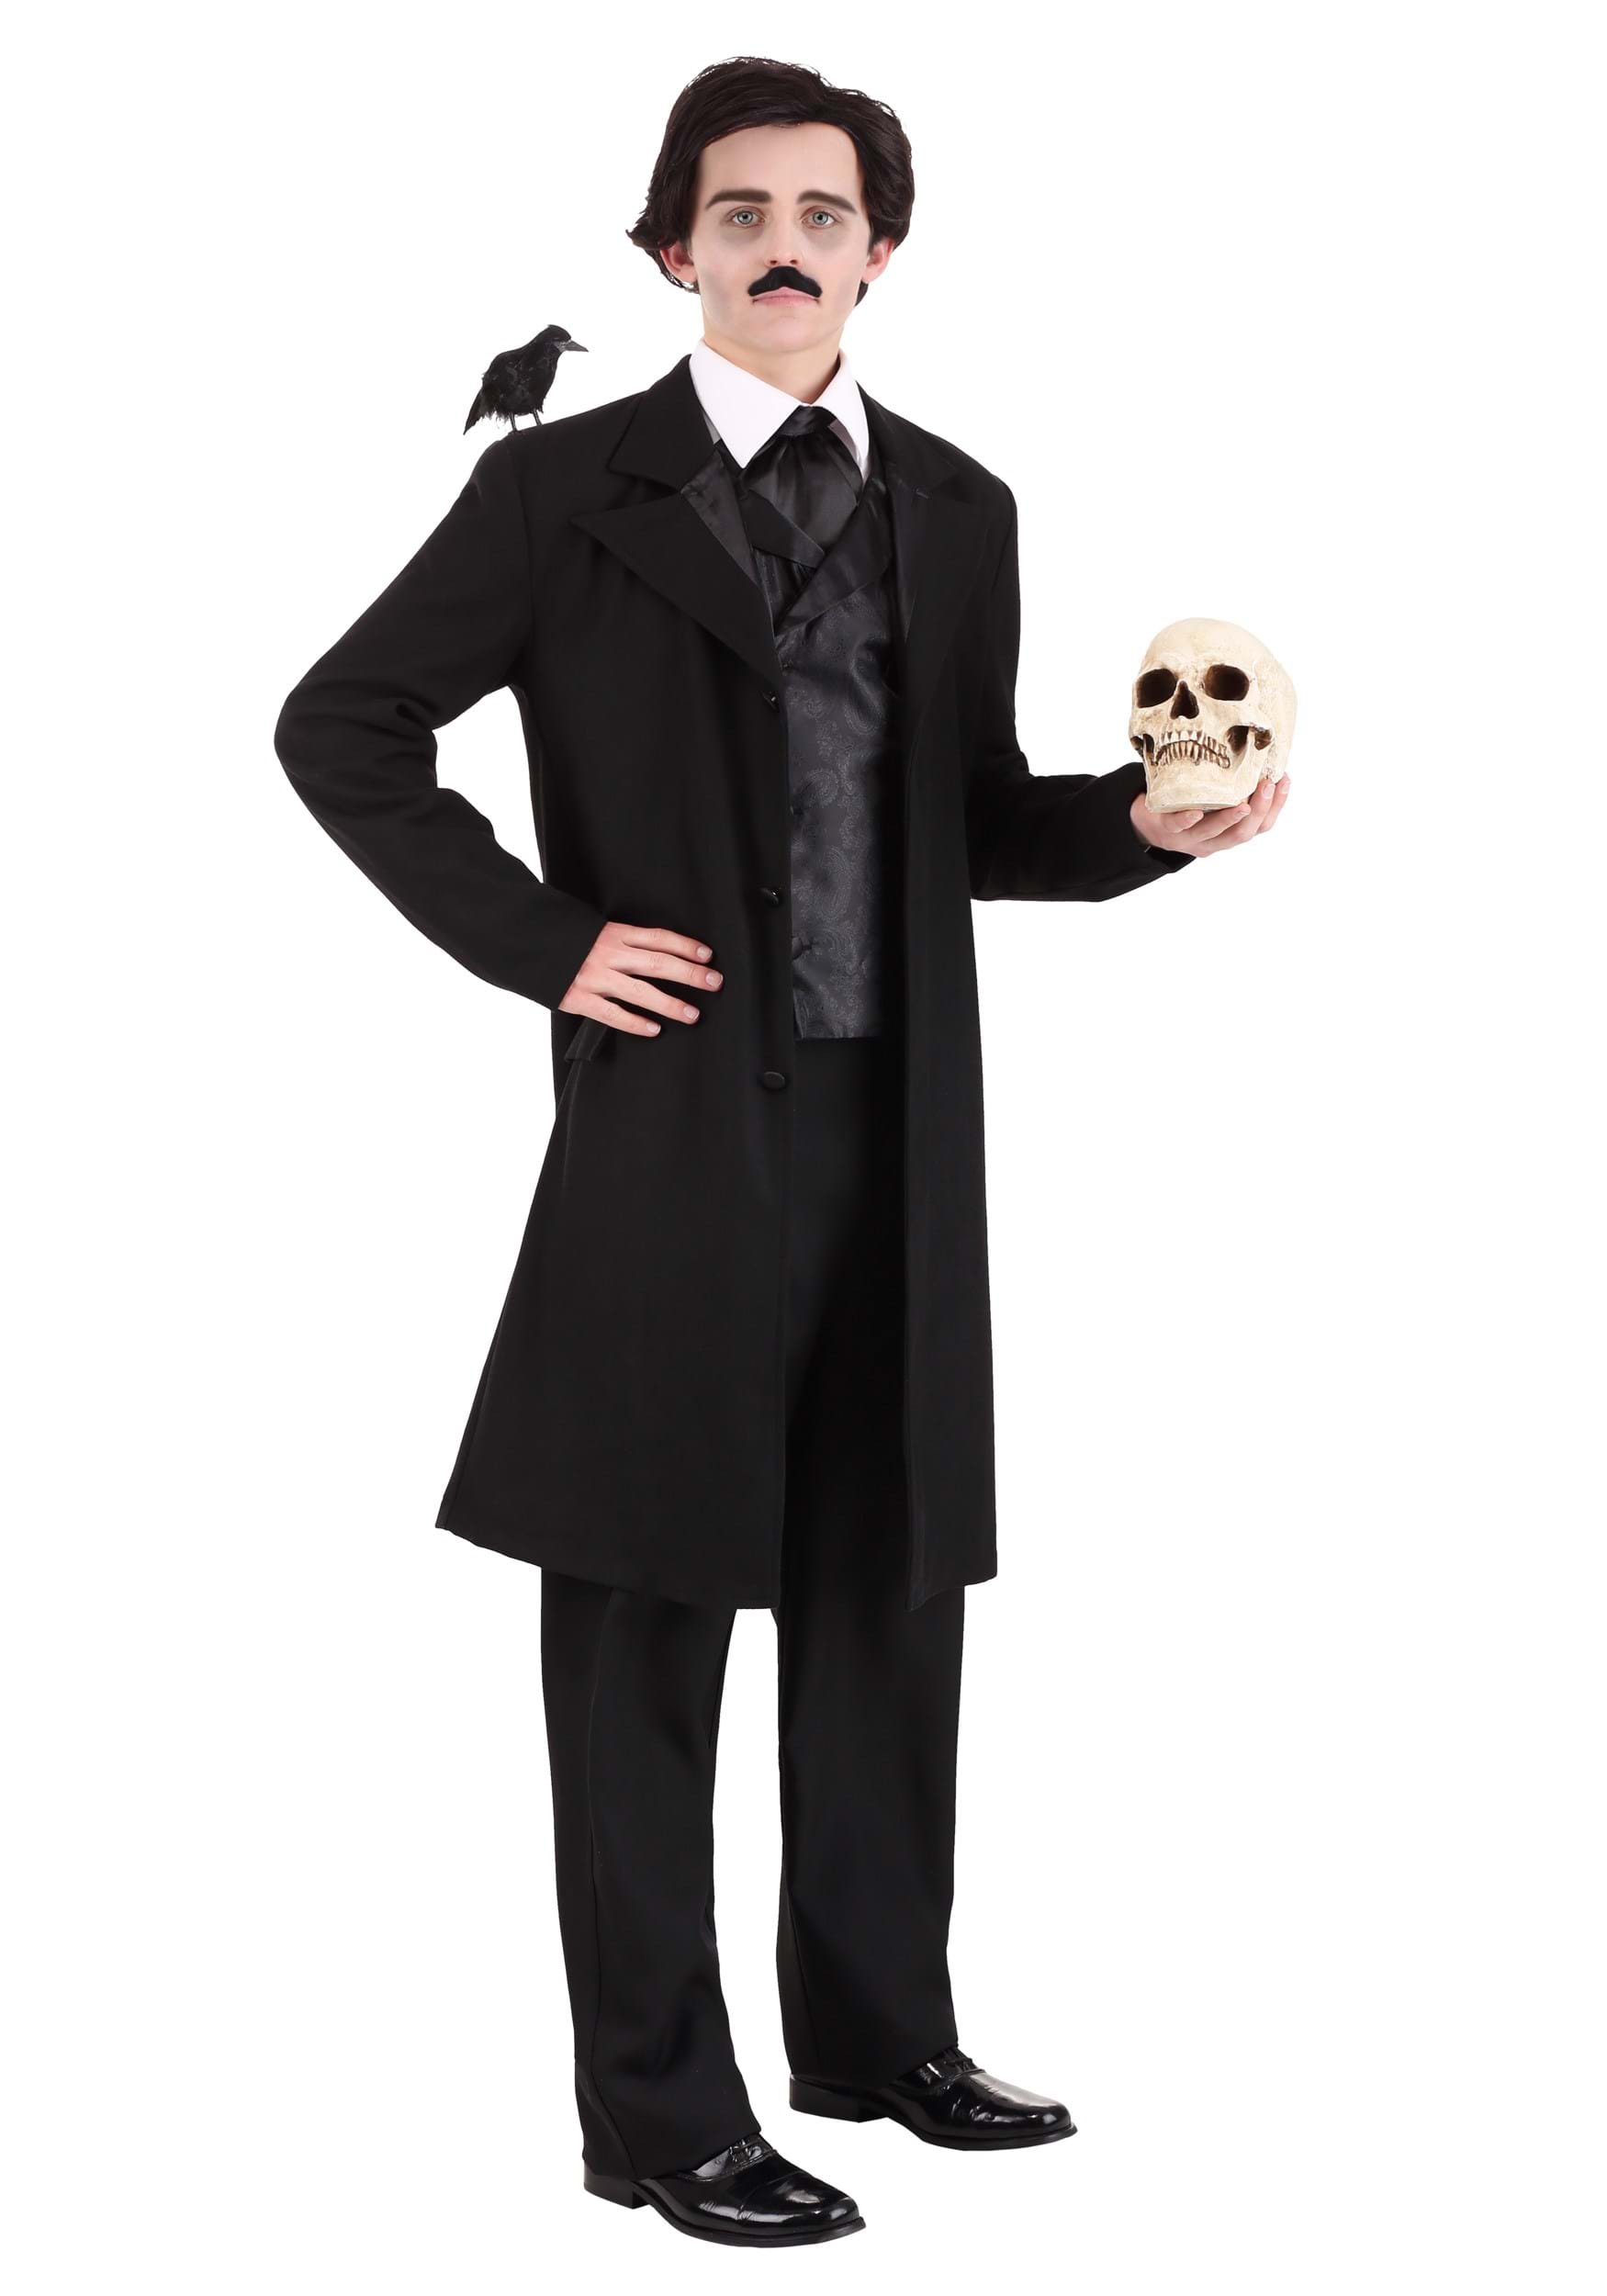 Bungo Stray Dogs Edgar Allan Poe Outfit uniform cosplay costume custom made   eBay